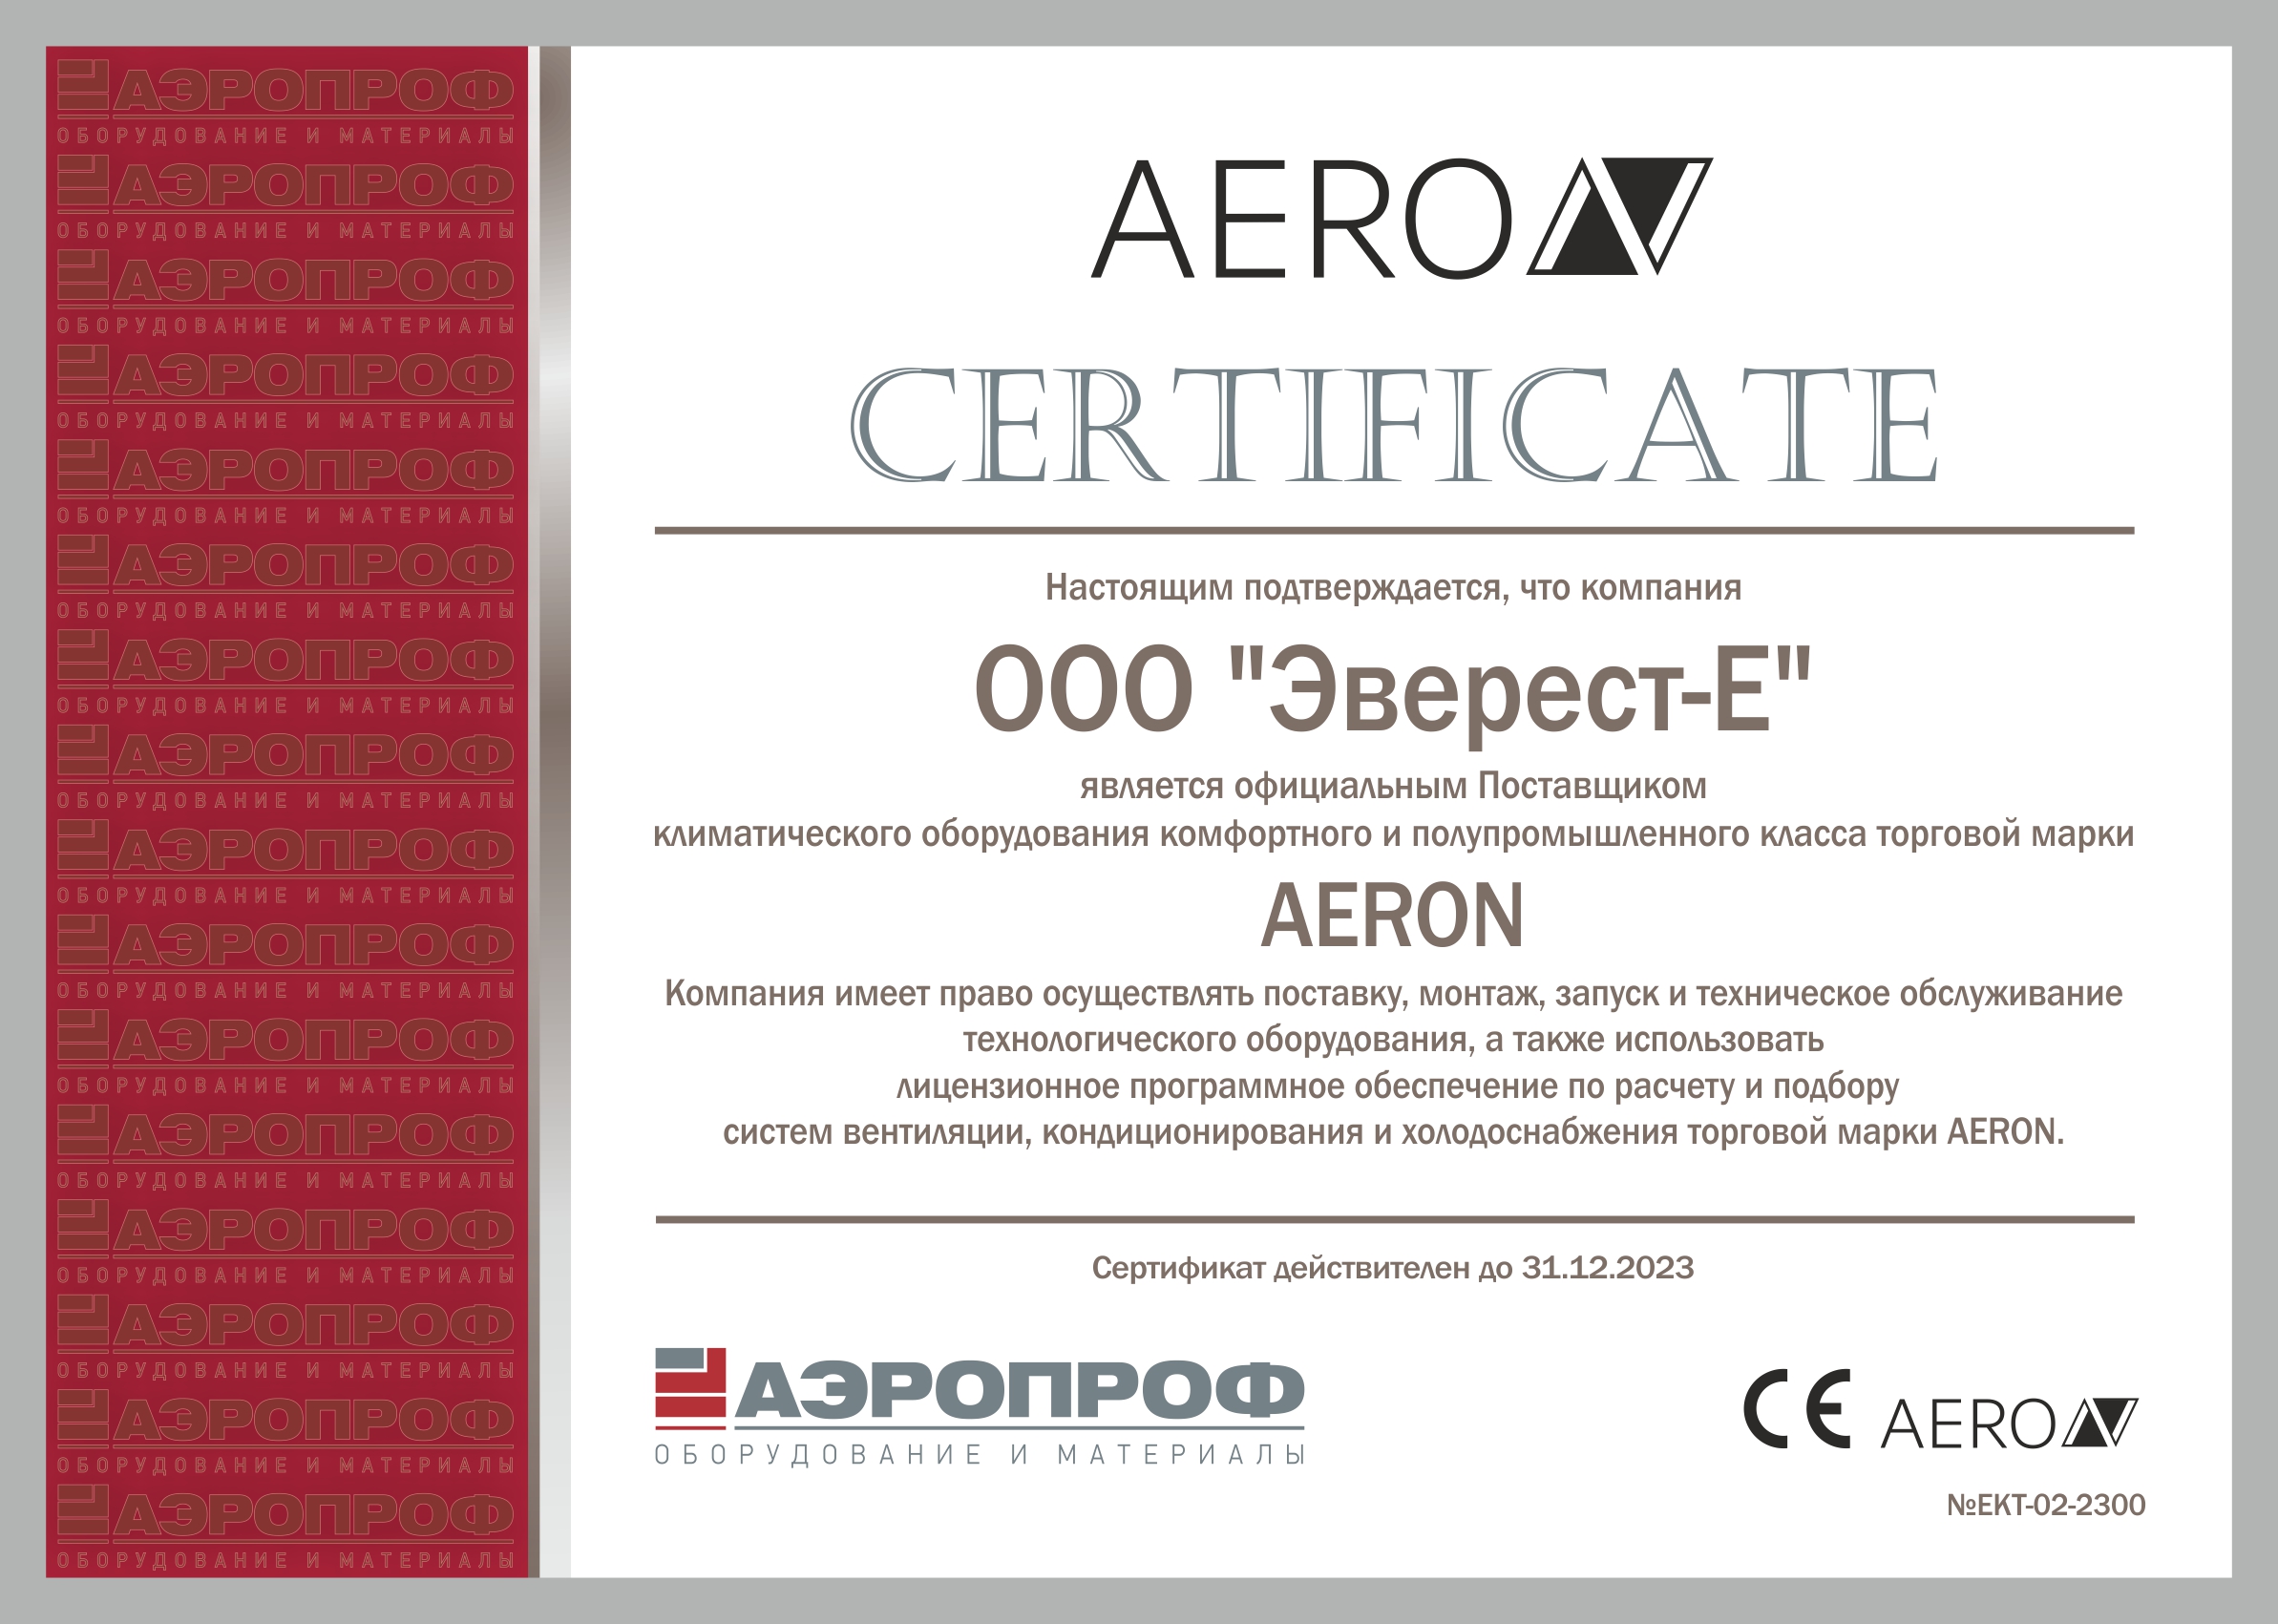 sert23-everest-aeron Kondicioner Aero ALRS-07IH3A-02/ALRS-07OH3A-02 kypit v Ekaterinbyrge v internet-magazine KlimatMarket96.ry Сертификат официального дилера